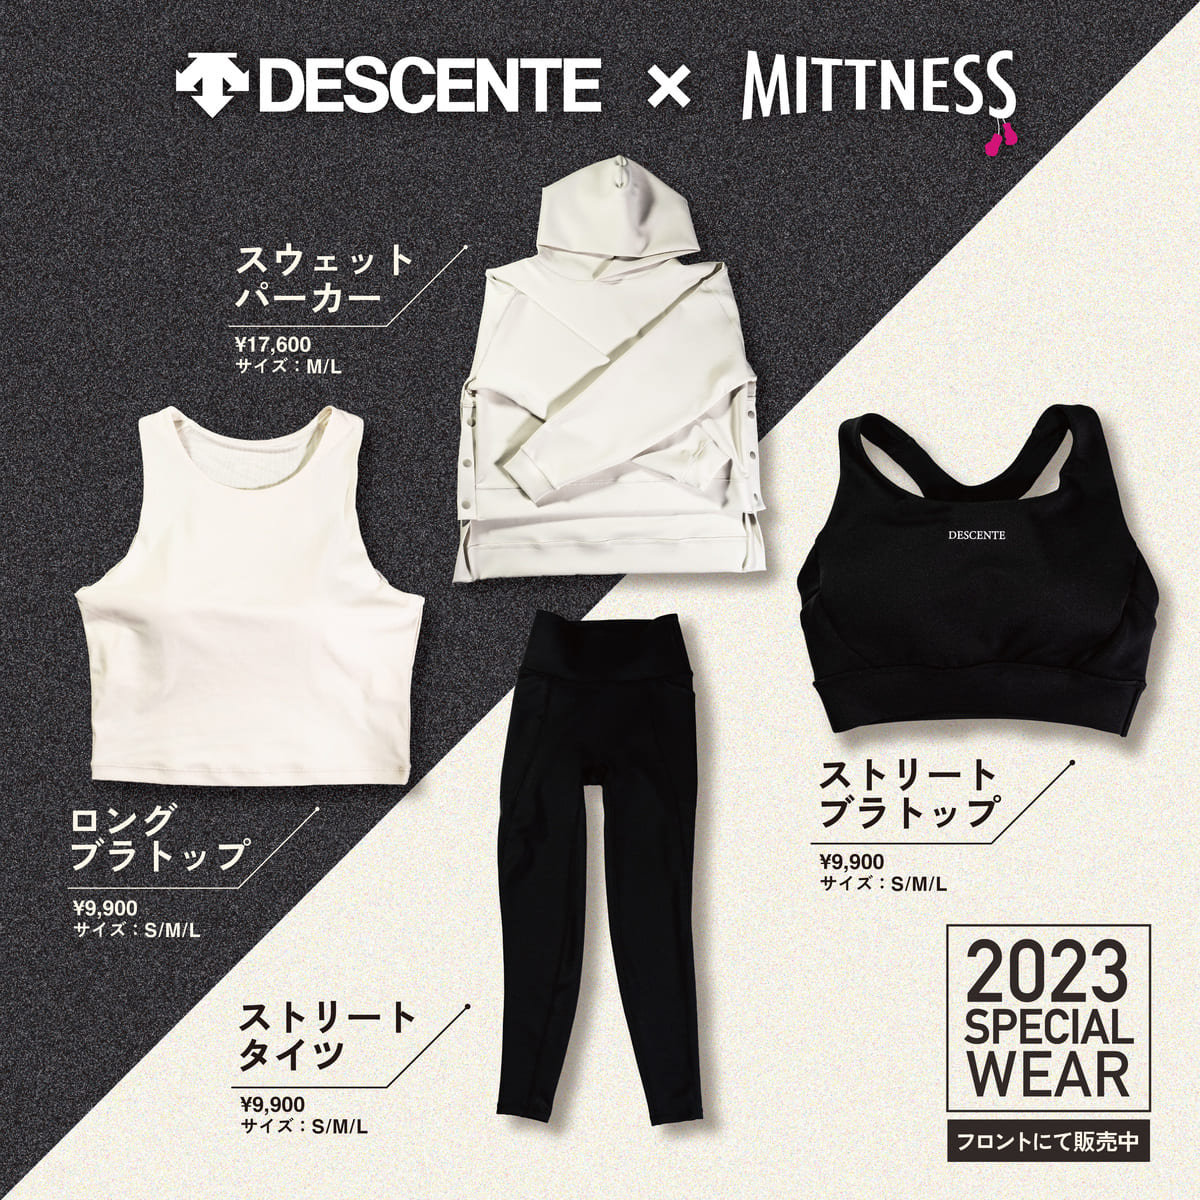 DESCENTE × MITTNESS 2023 Special WEAR販売のお知らせ